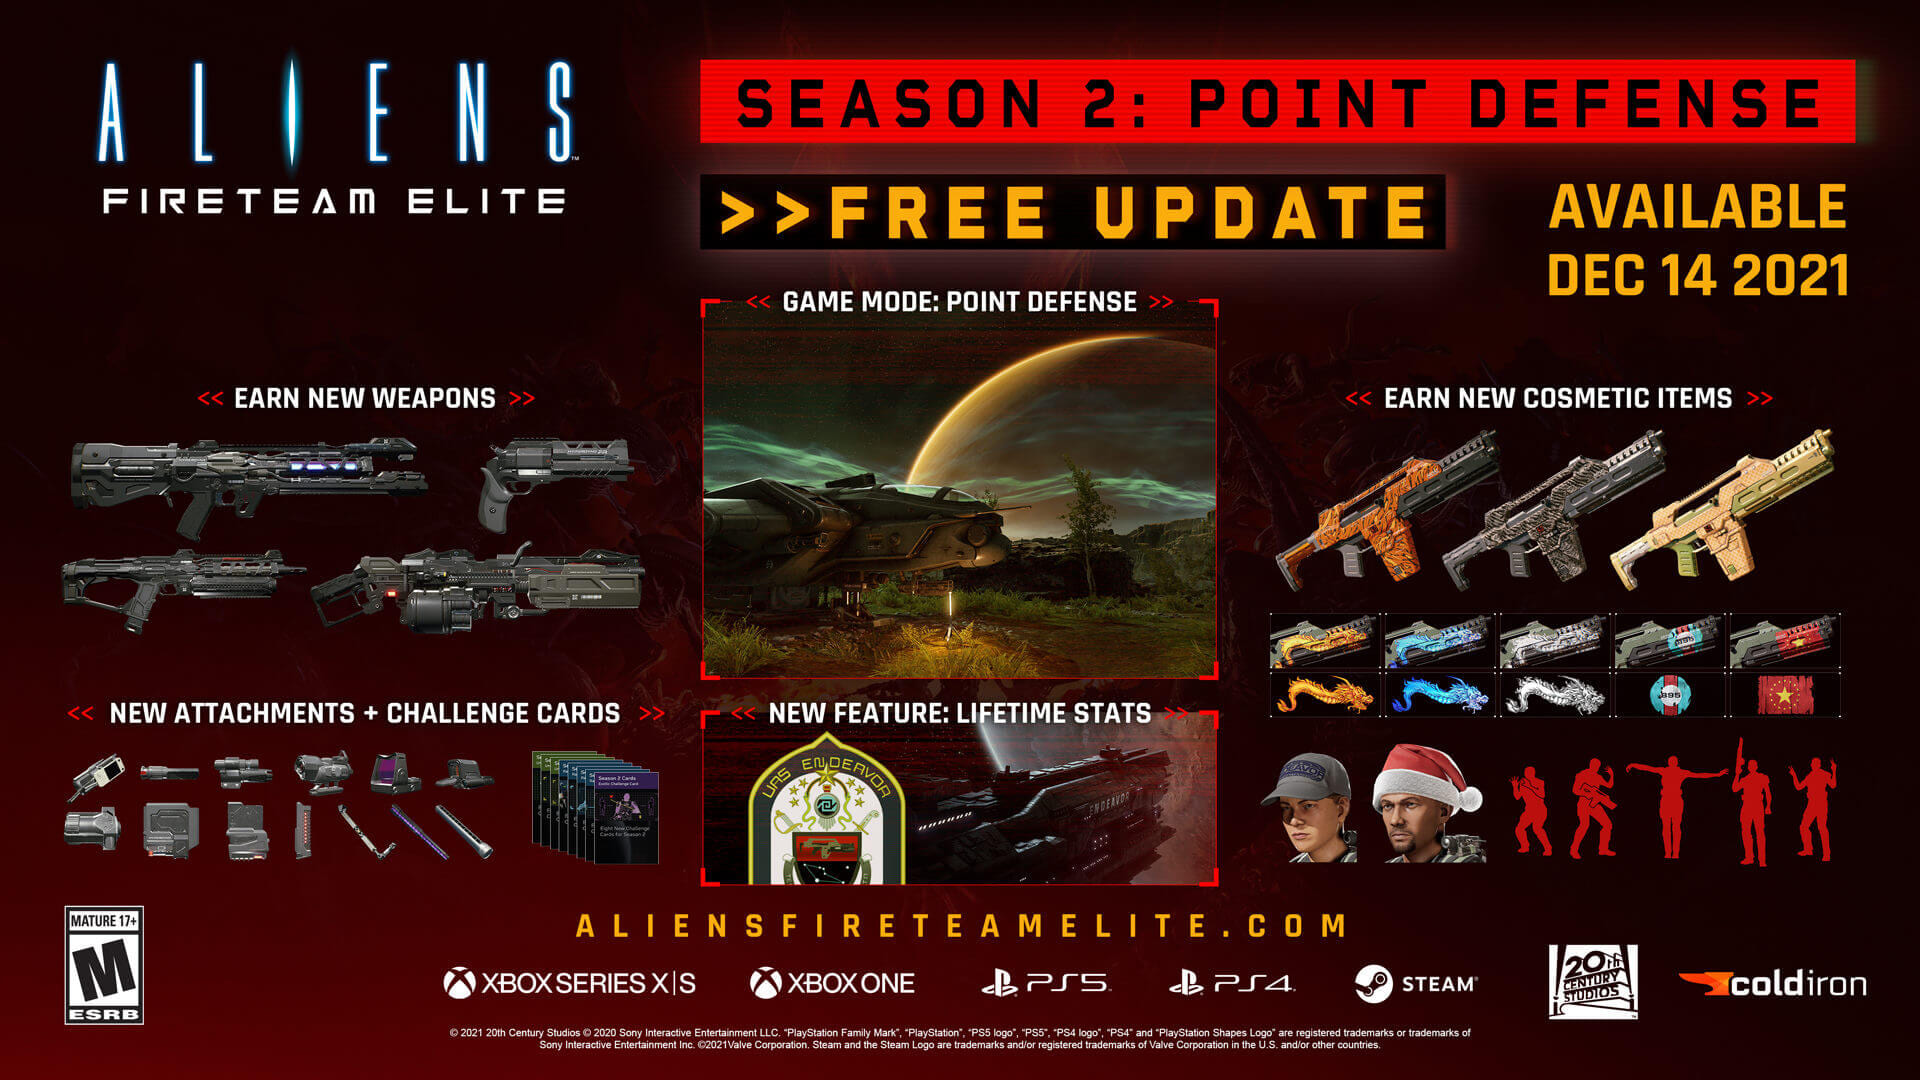 Aliens: Fireteam Elite Season 2 Point Defense free update content